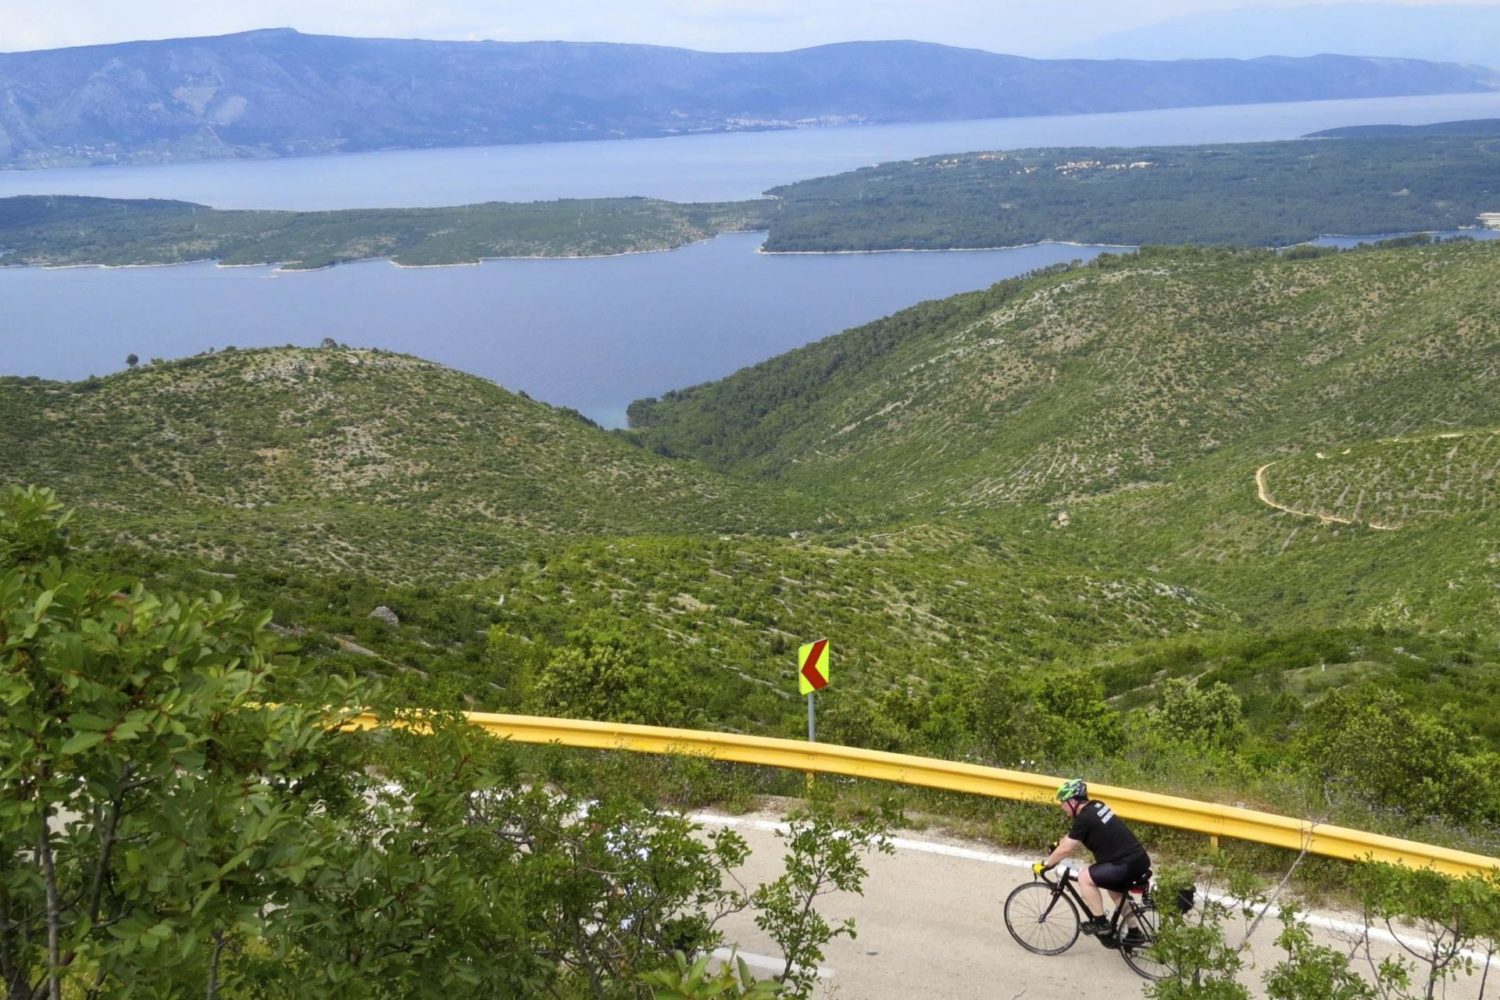 Self guided cycling tour of Croatia's coast and islands